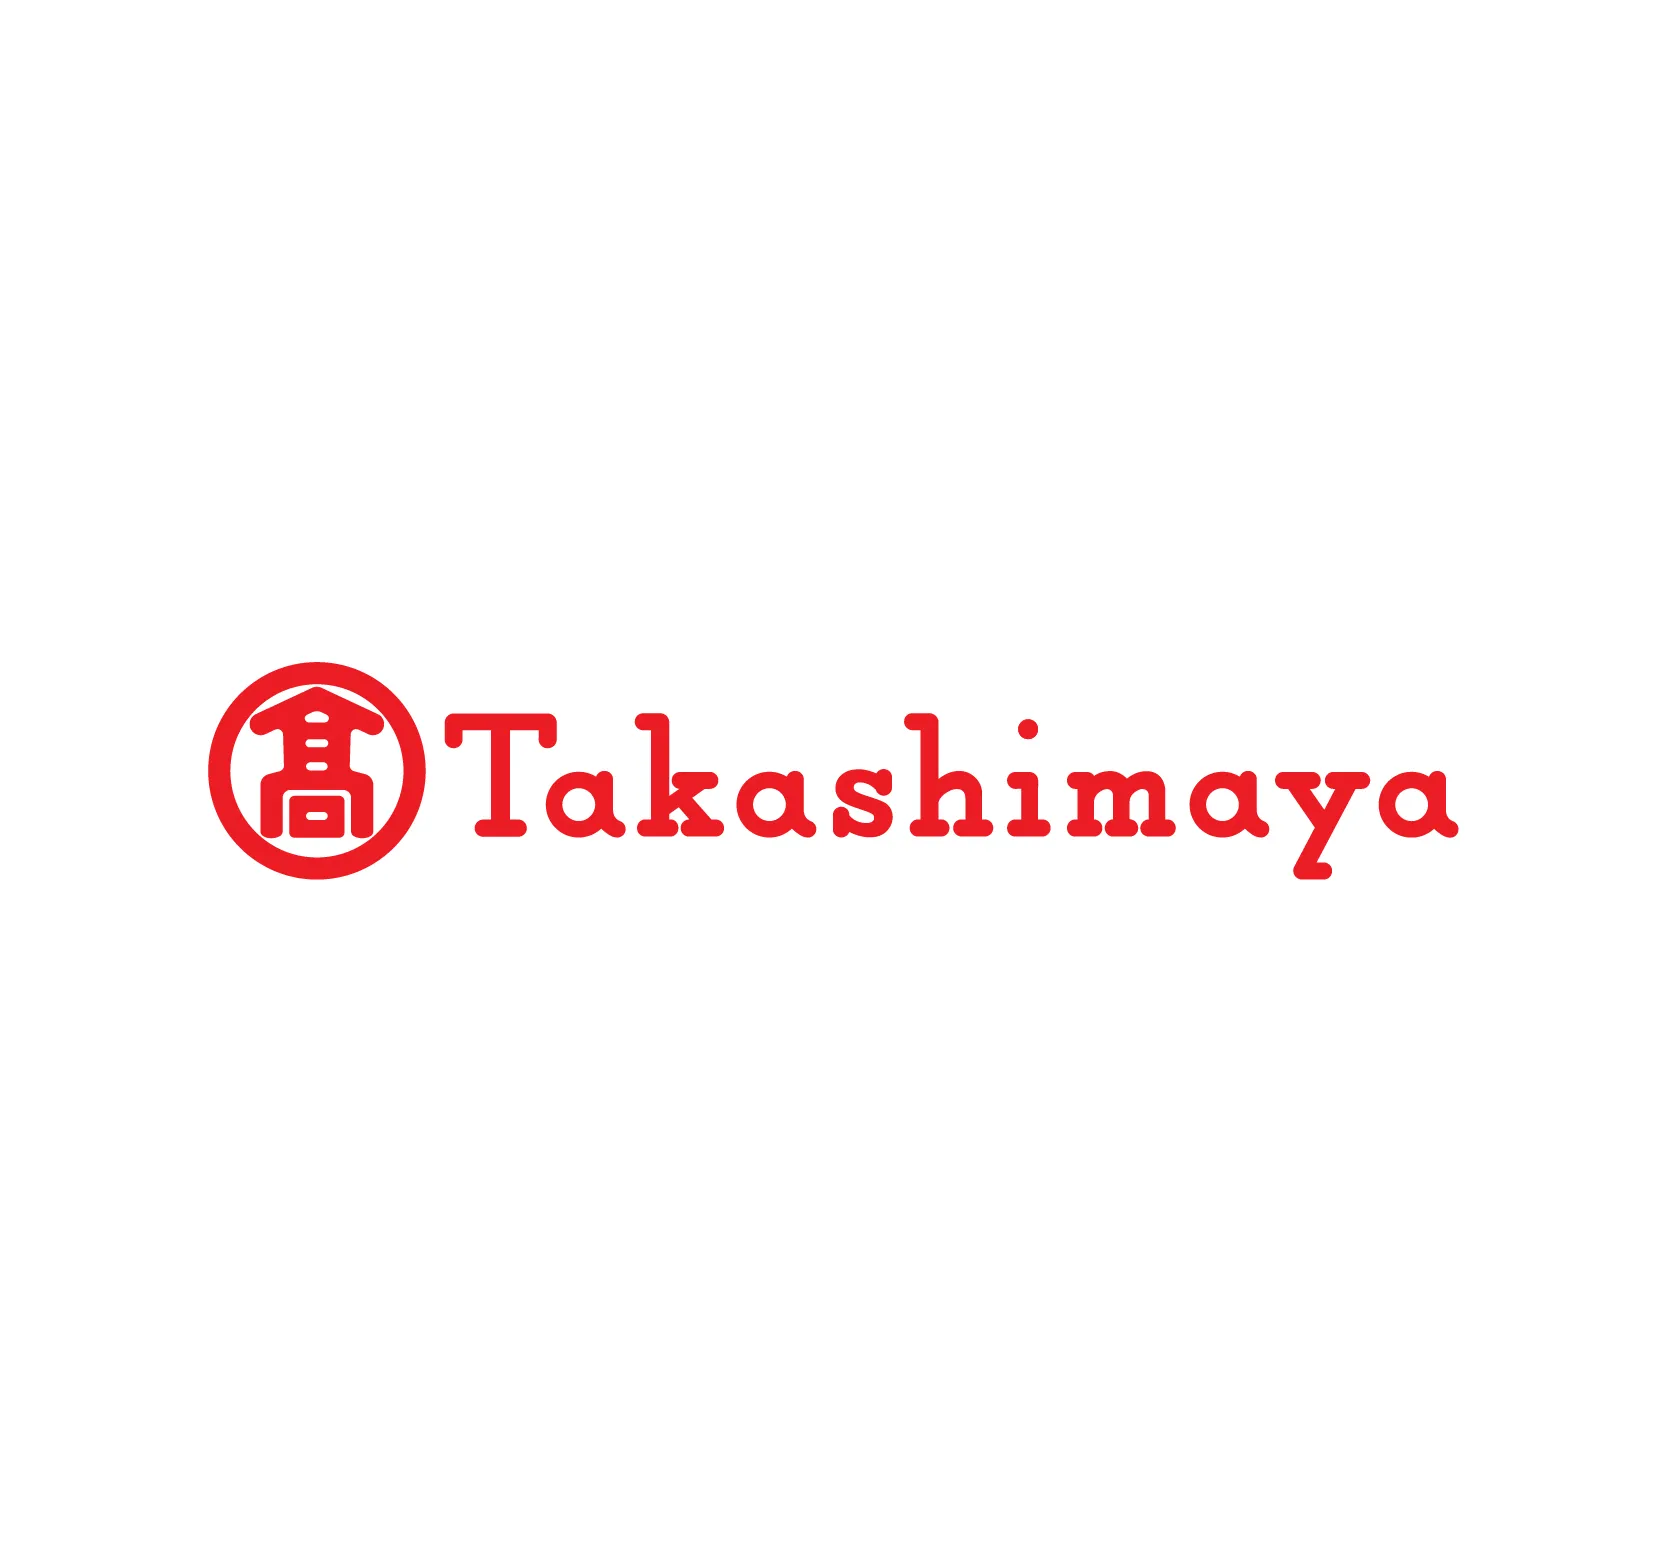 Takashimaya VN